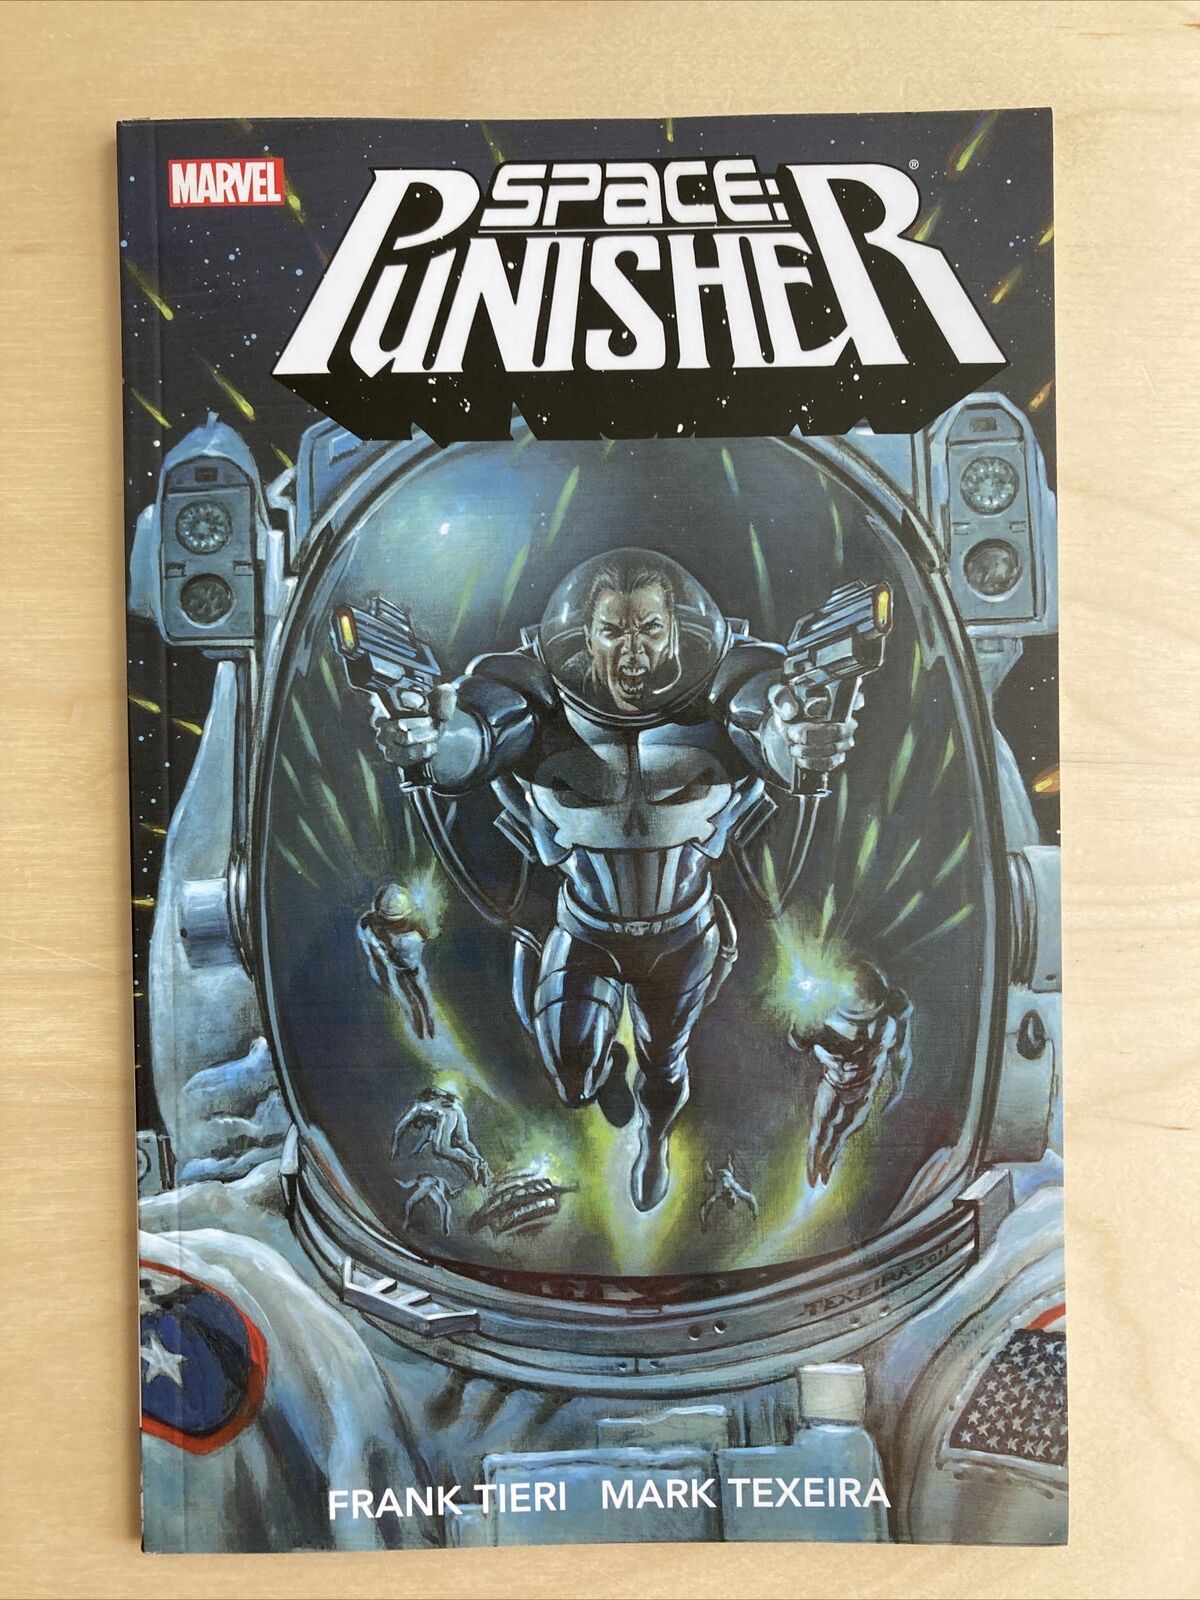 Space : Punisher (2012 Marvel Trade Paperback Frank Tieri )